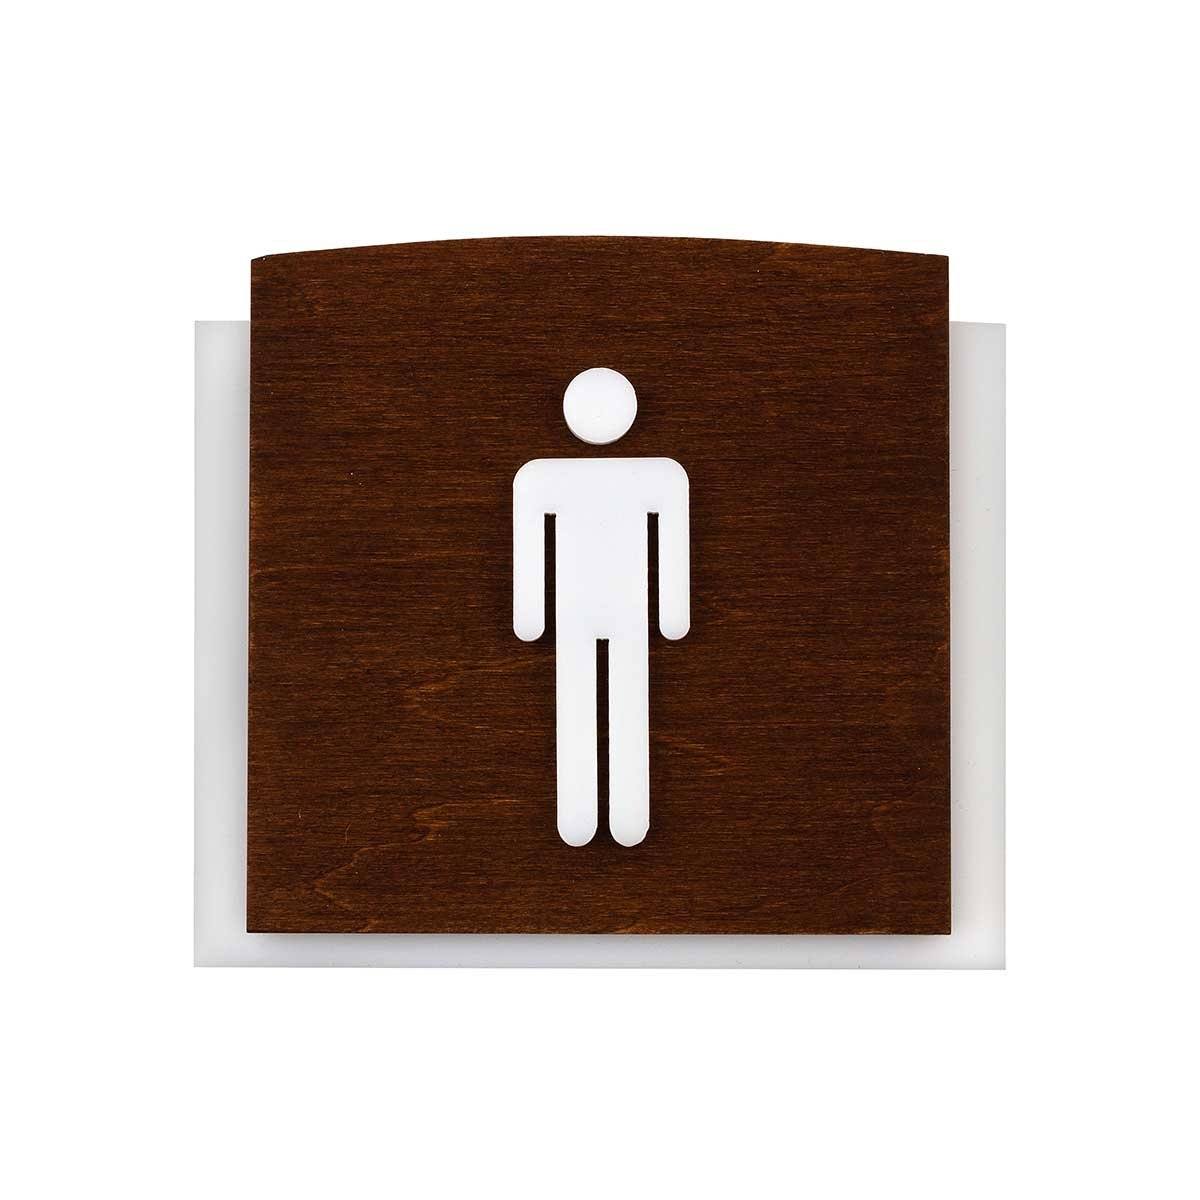 Wood Bathrooms Door Signs for Man Bathroom Signs Indian Rosewood Bsign